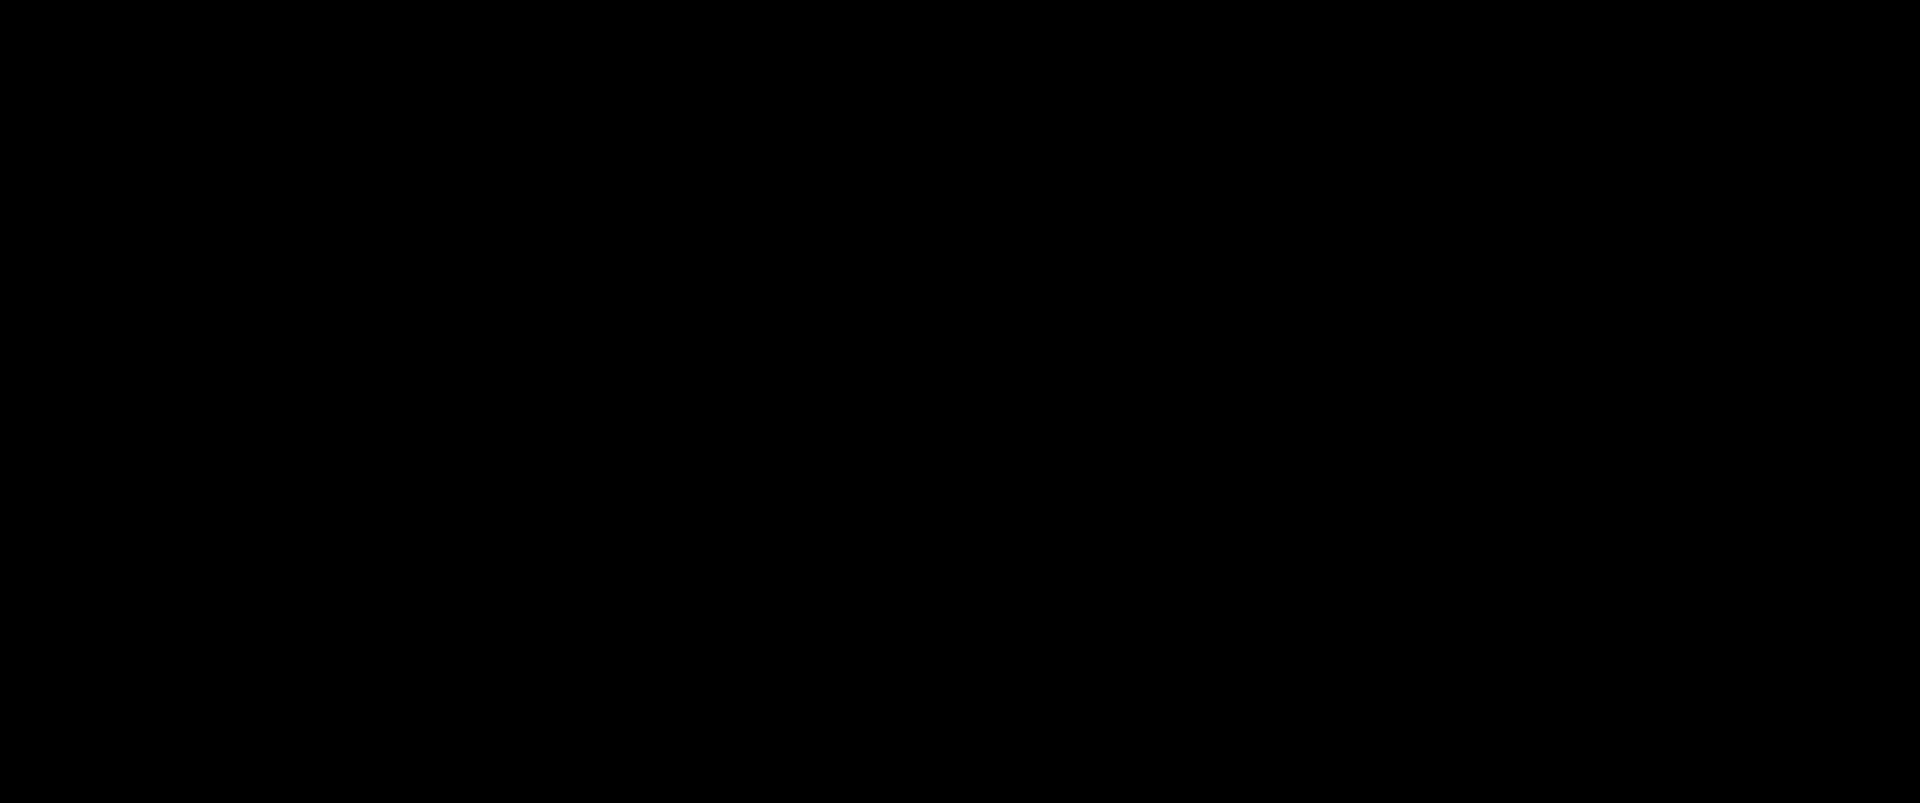 Candlepin logo